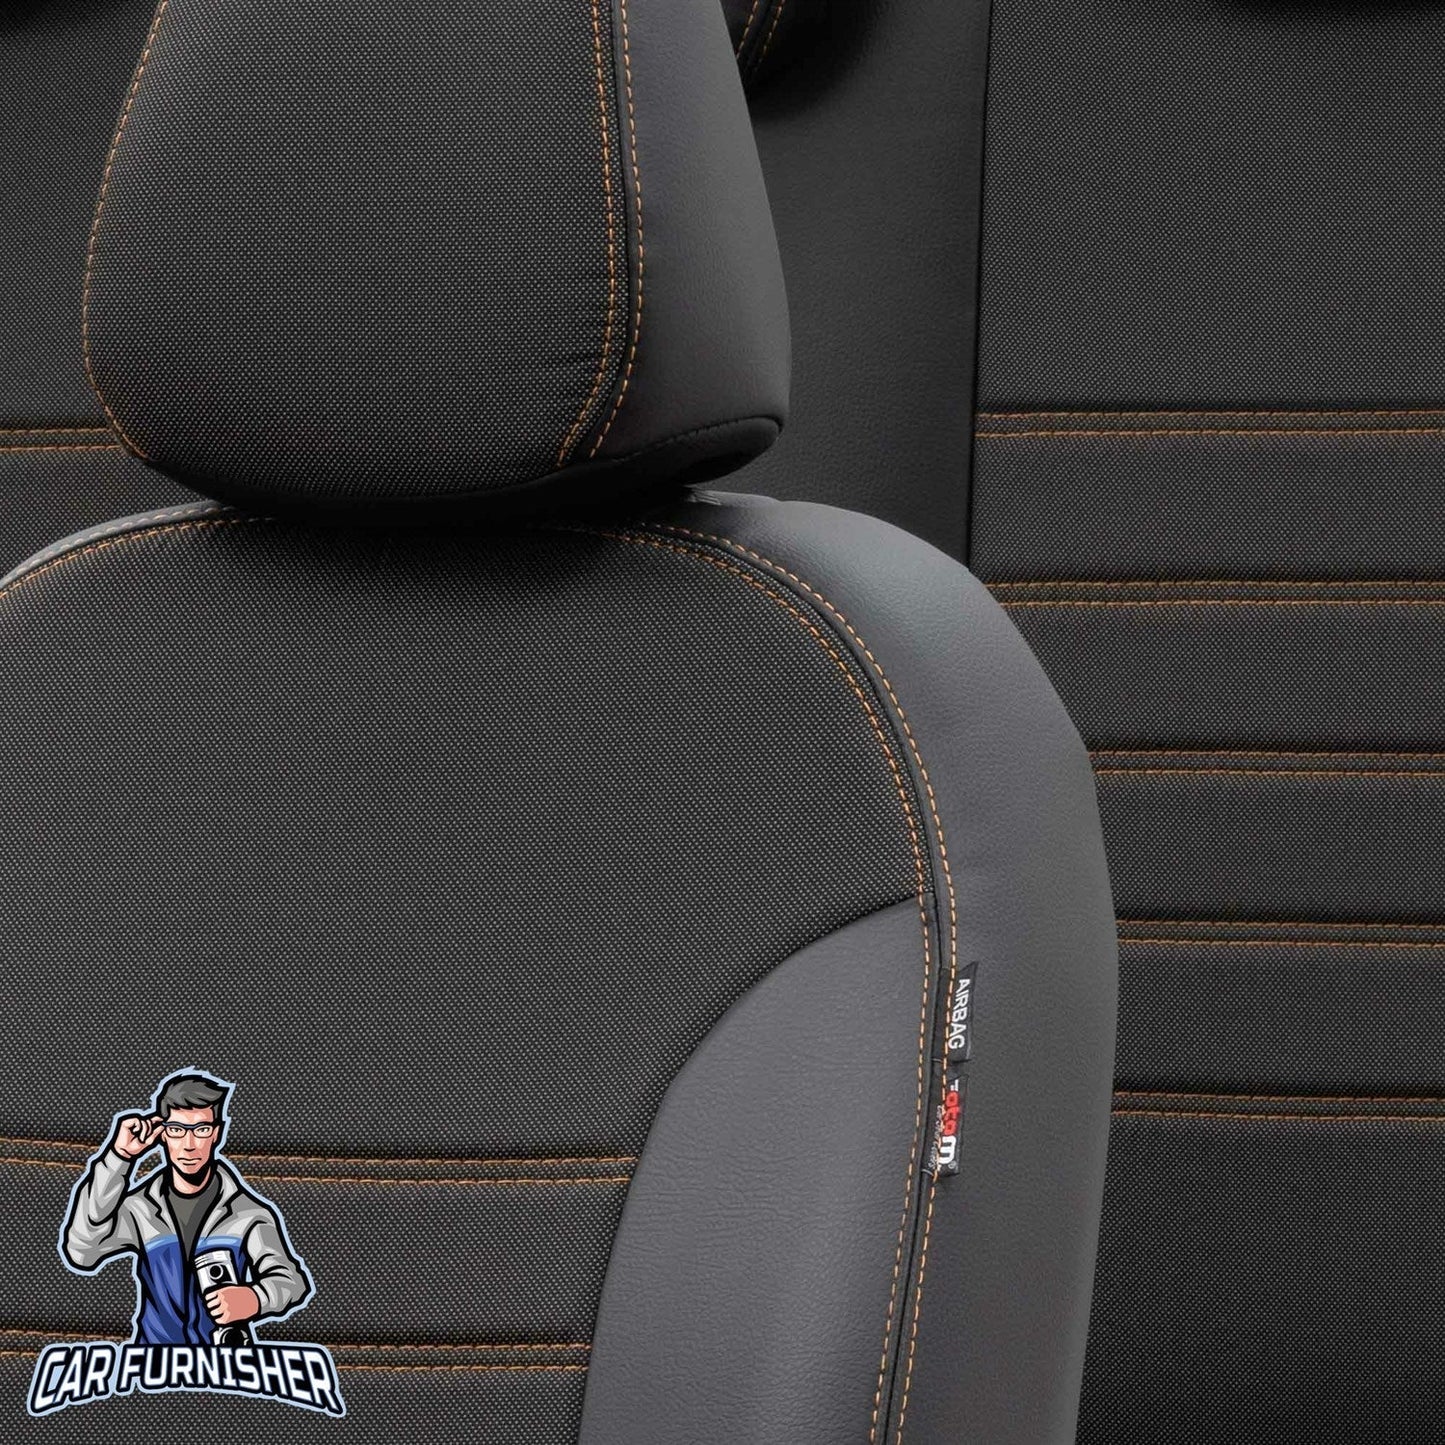 Dacia Logan Seat Covers Paris Leather & Jacquard Design Dark Beige Leather & Jacquard Fabric